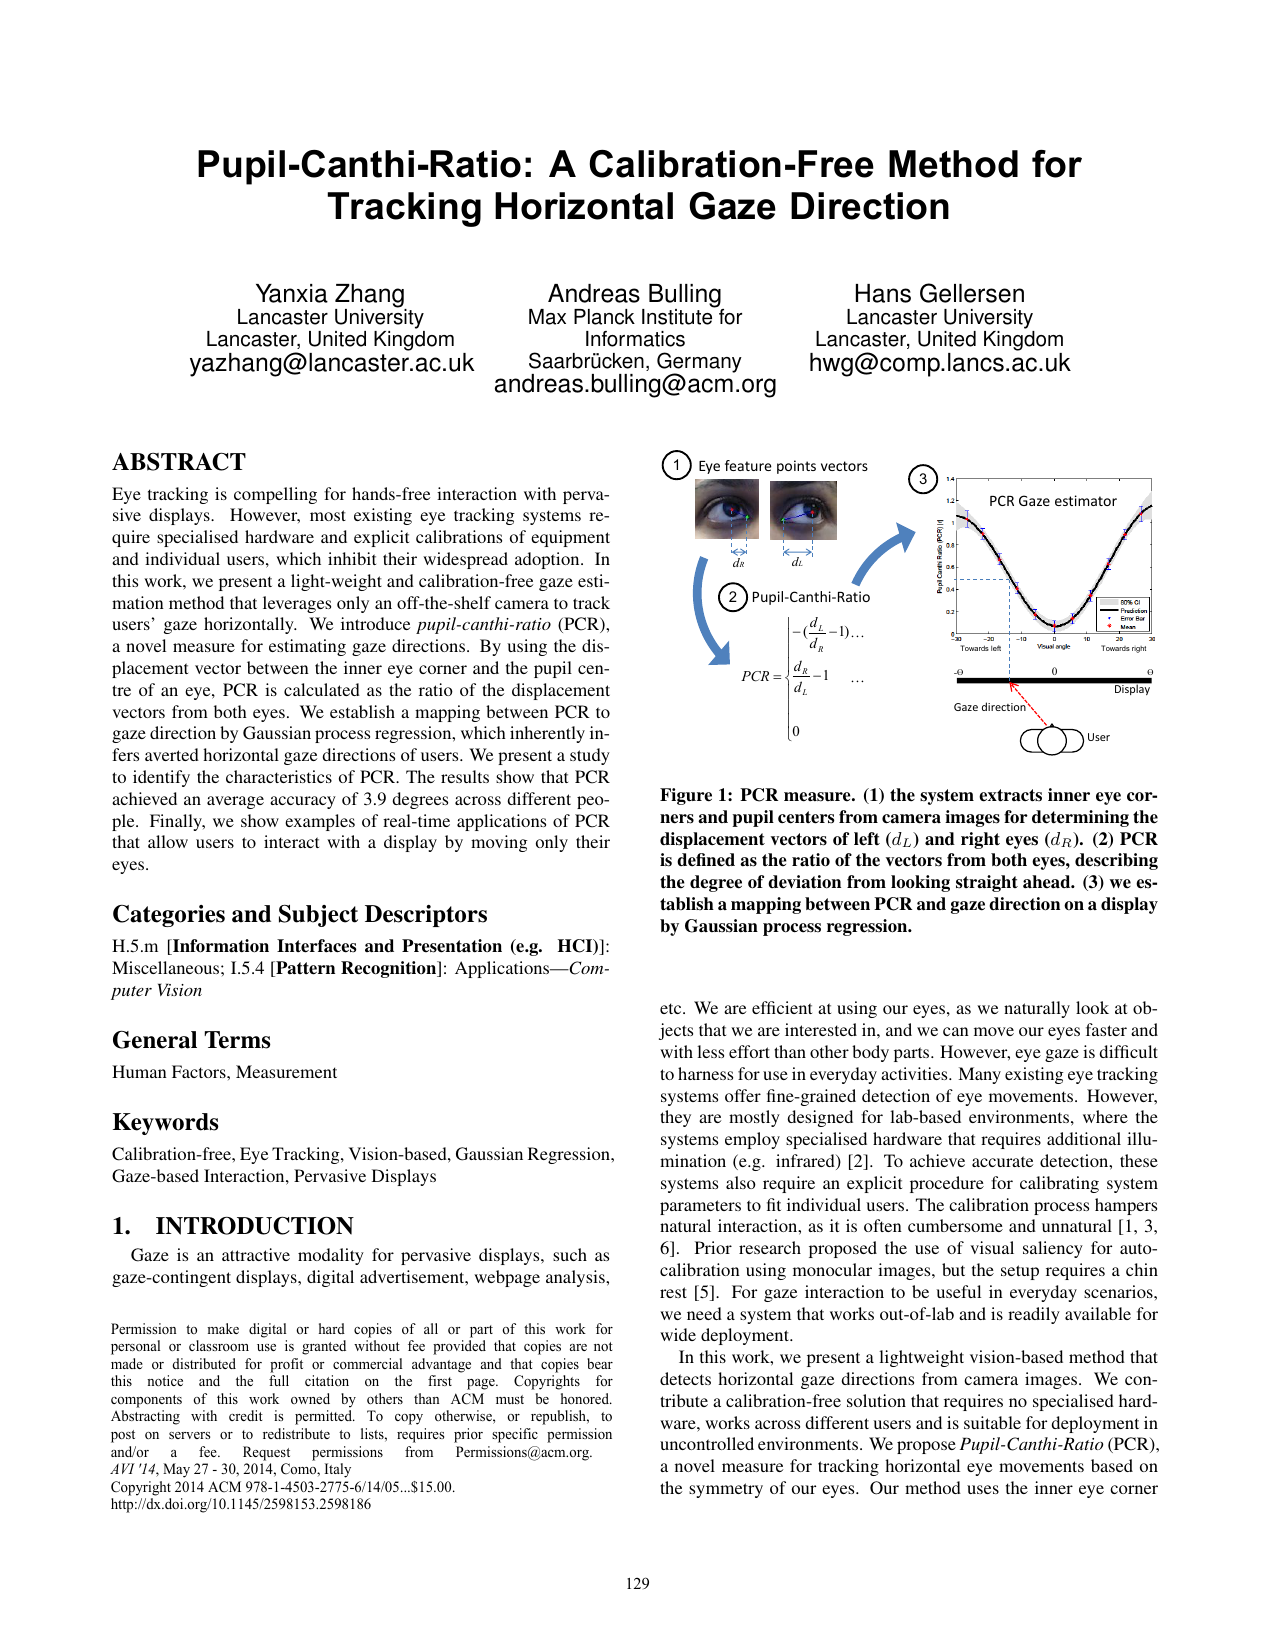 Pupil-Canthi-Ratio: A Calibration-Free Method for Tracking Horizontal Gaze Direction